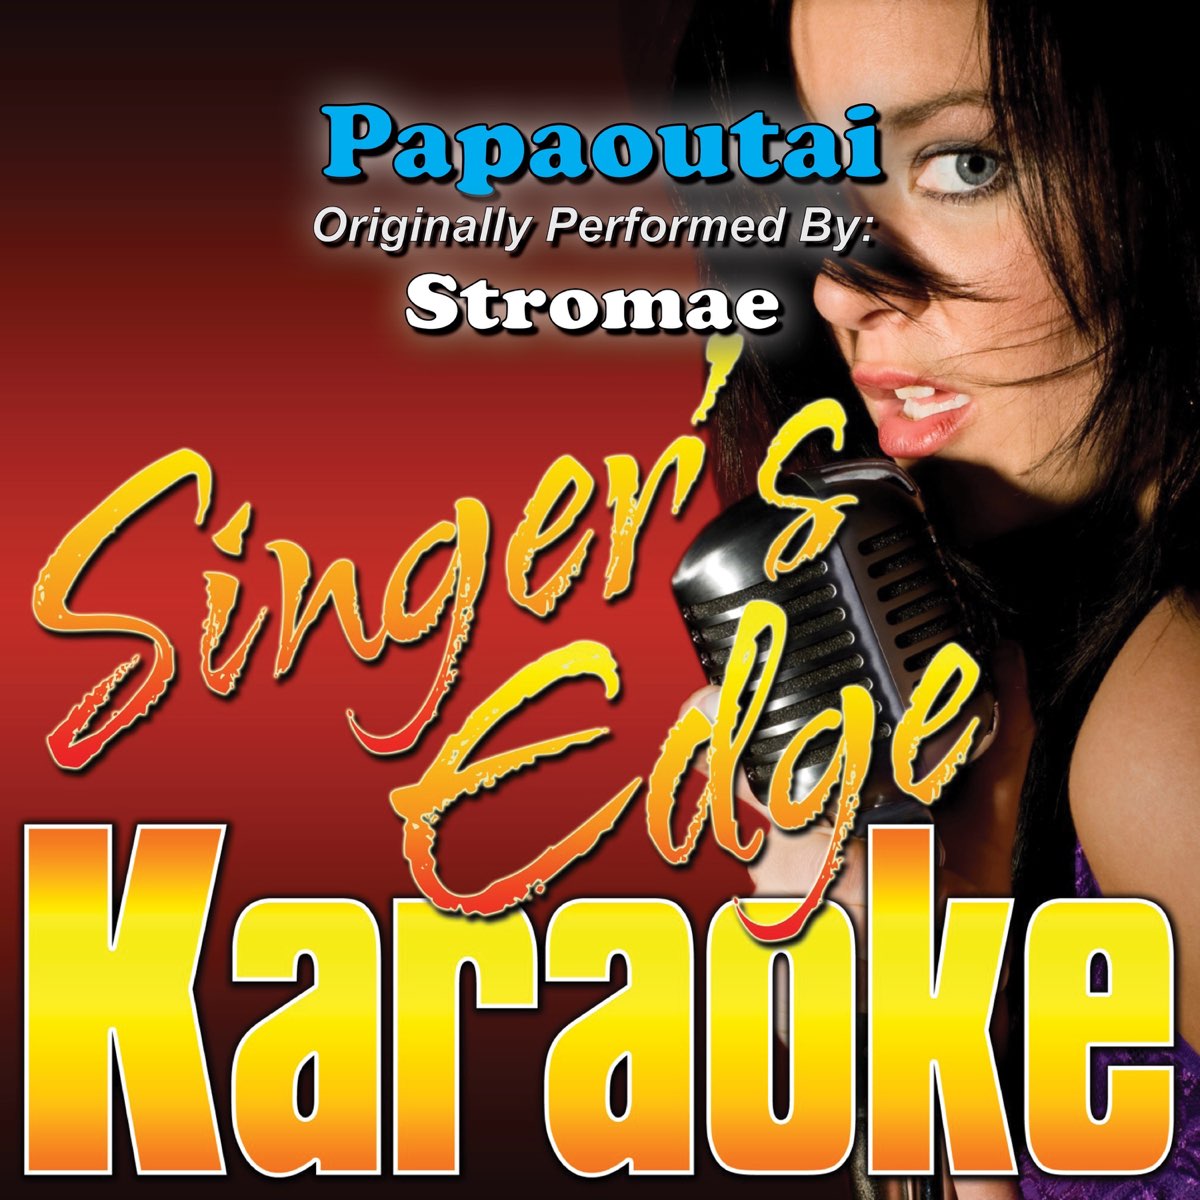 Papaoutai (Originally Performed By Stromae) [Karaoke Version] - Single de  Singer's Edge Karaoke en Apple Music